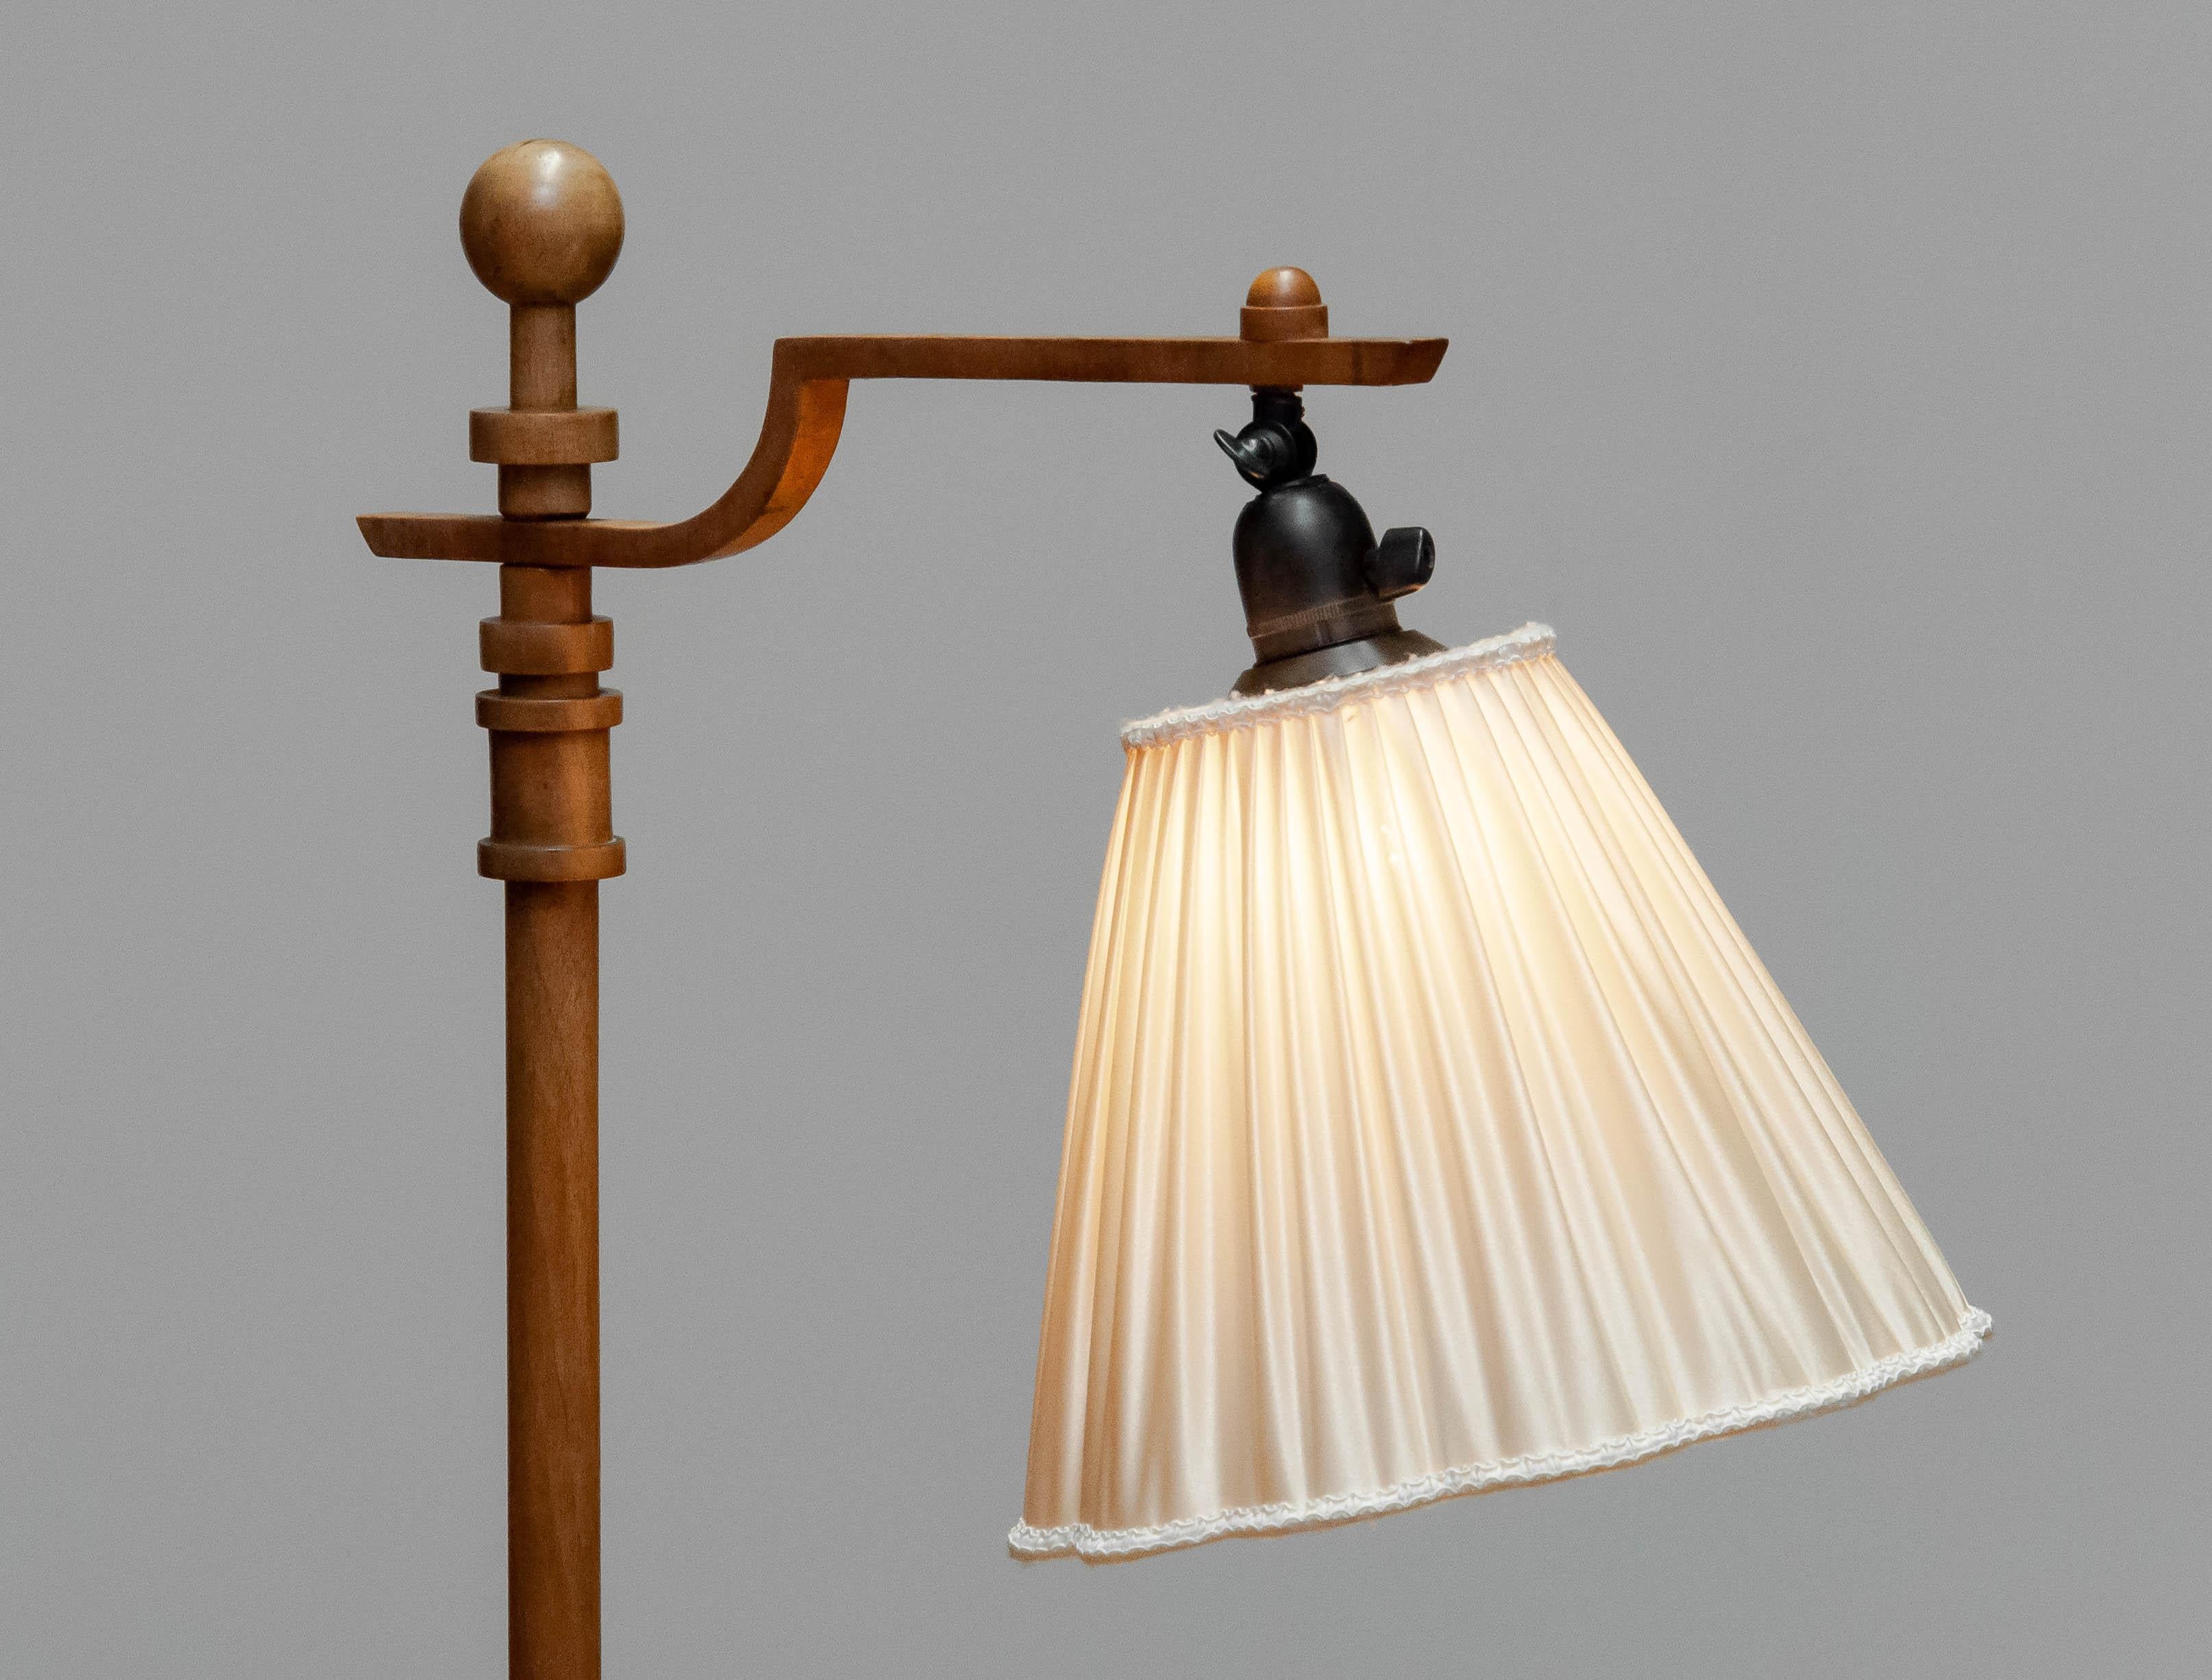 1930 Swedish Designer Art Deco Wooden Floor Lamp In Walnut With Silk Satin Shade In Good Condition For Sale In Silvolde, Gelderland